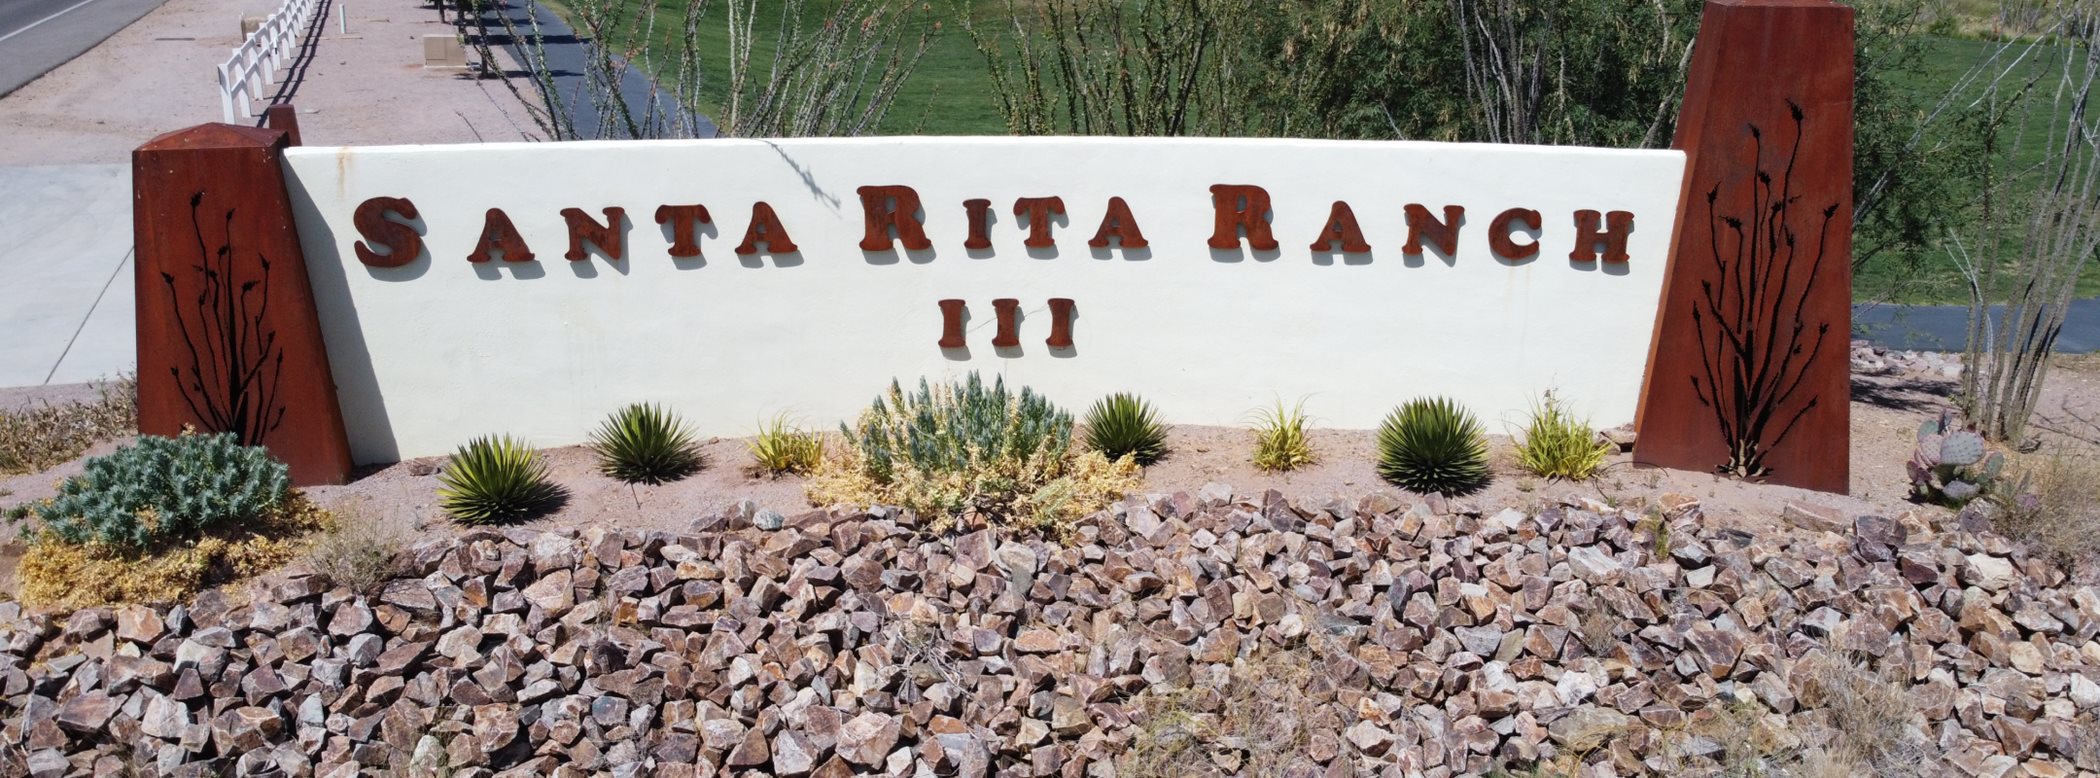 Santa Rite Ranch monument sign